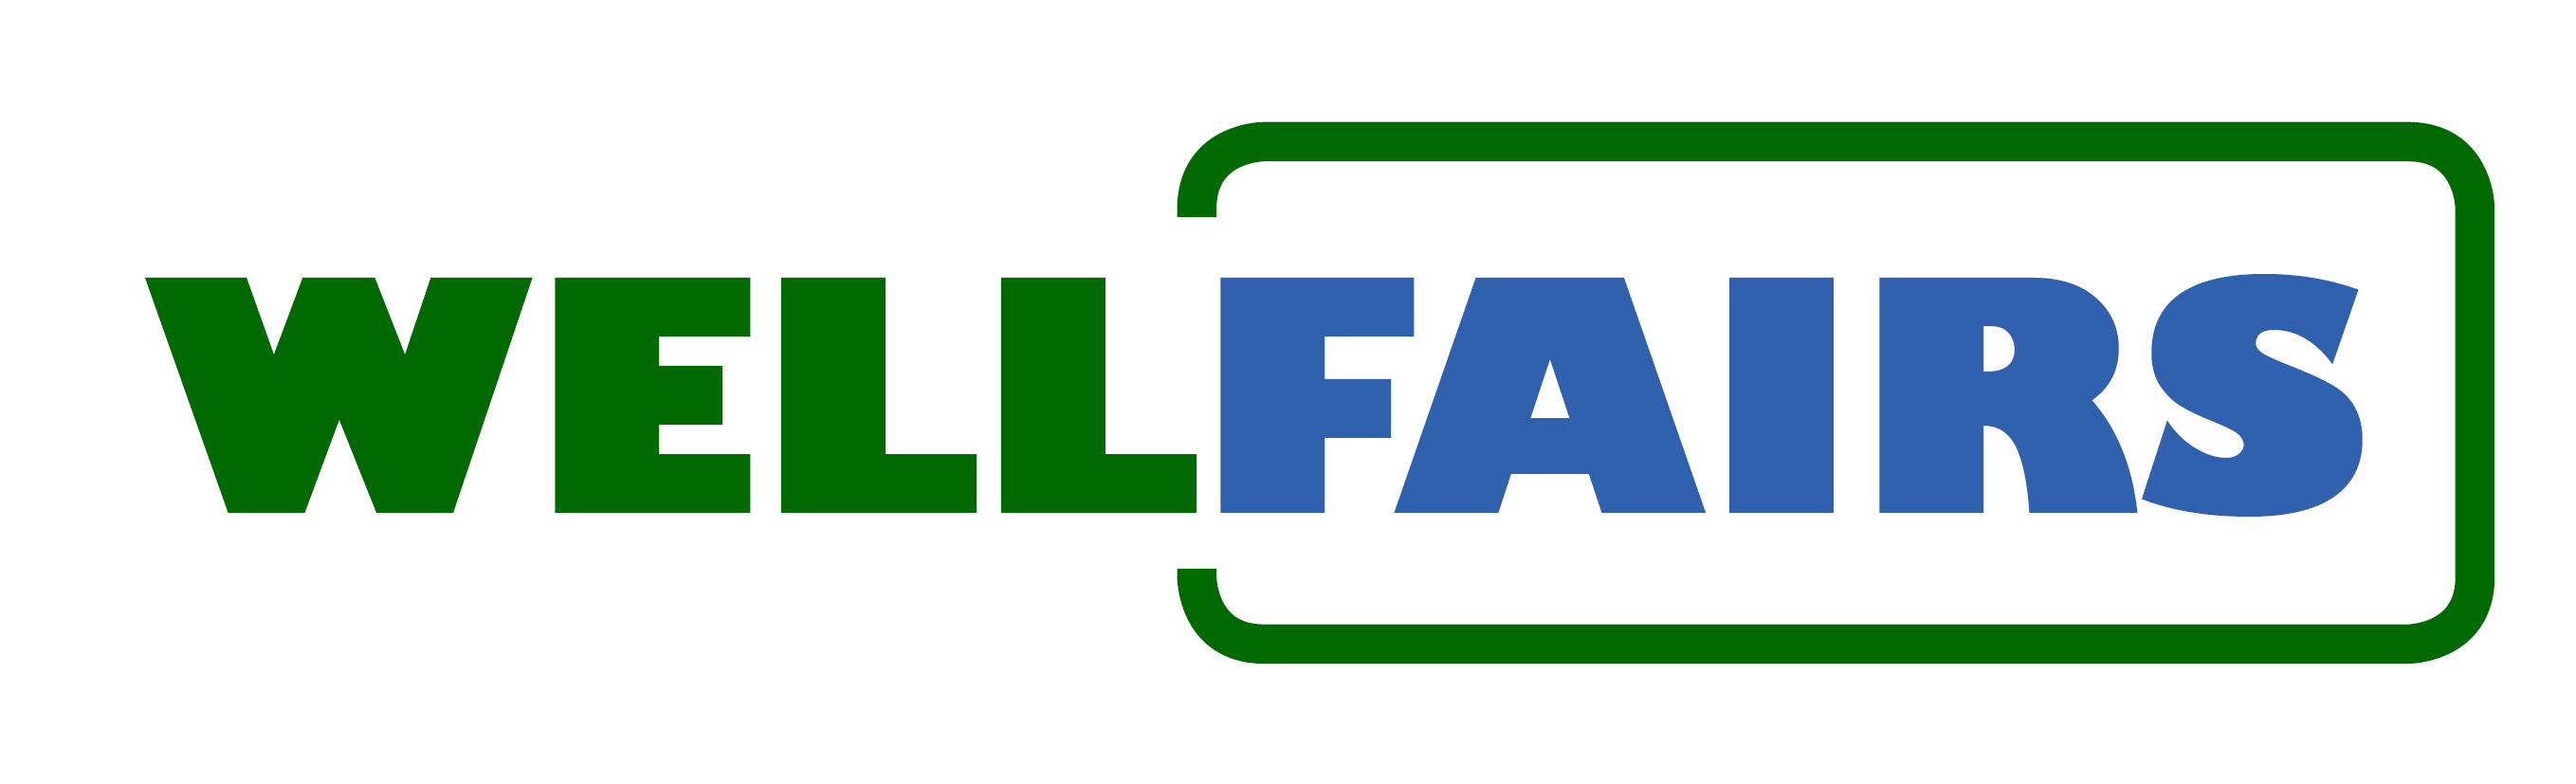 wellfairs_logo.jpg